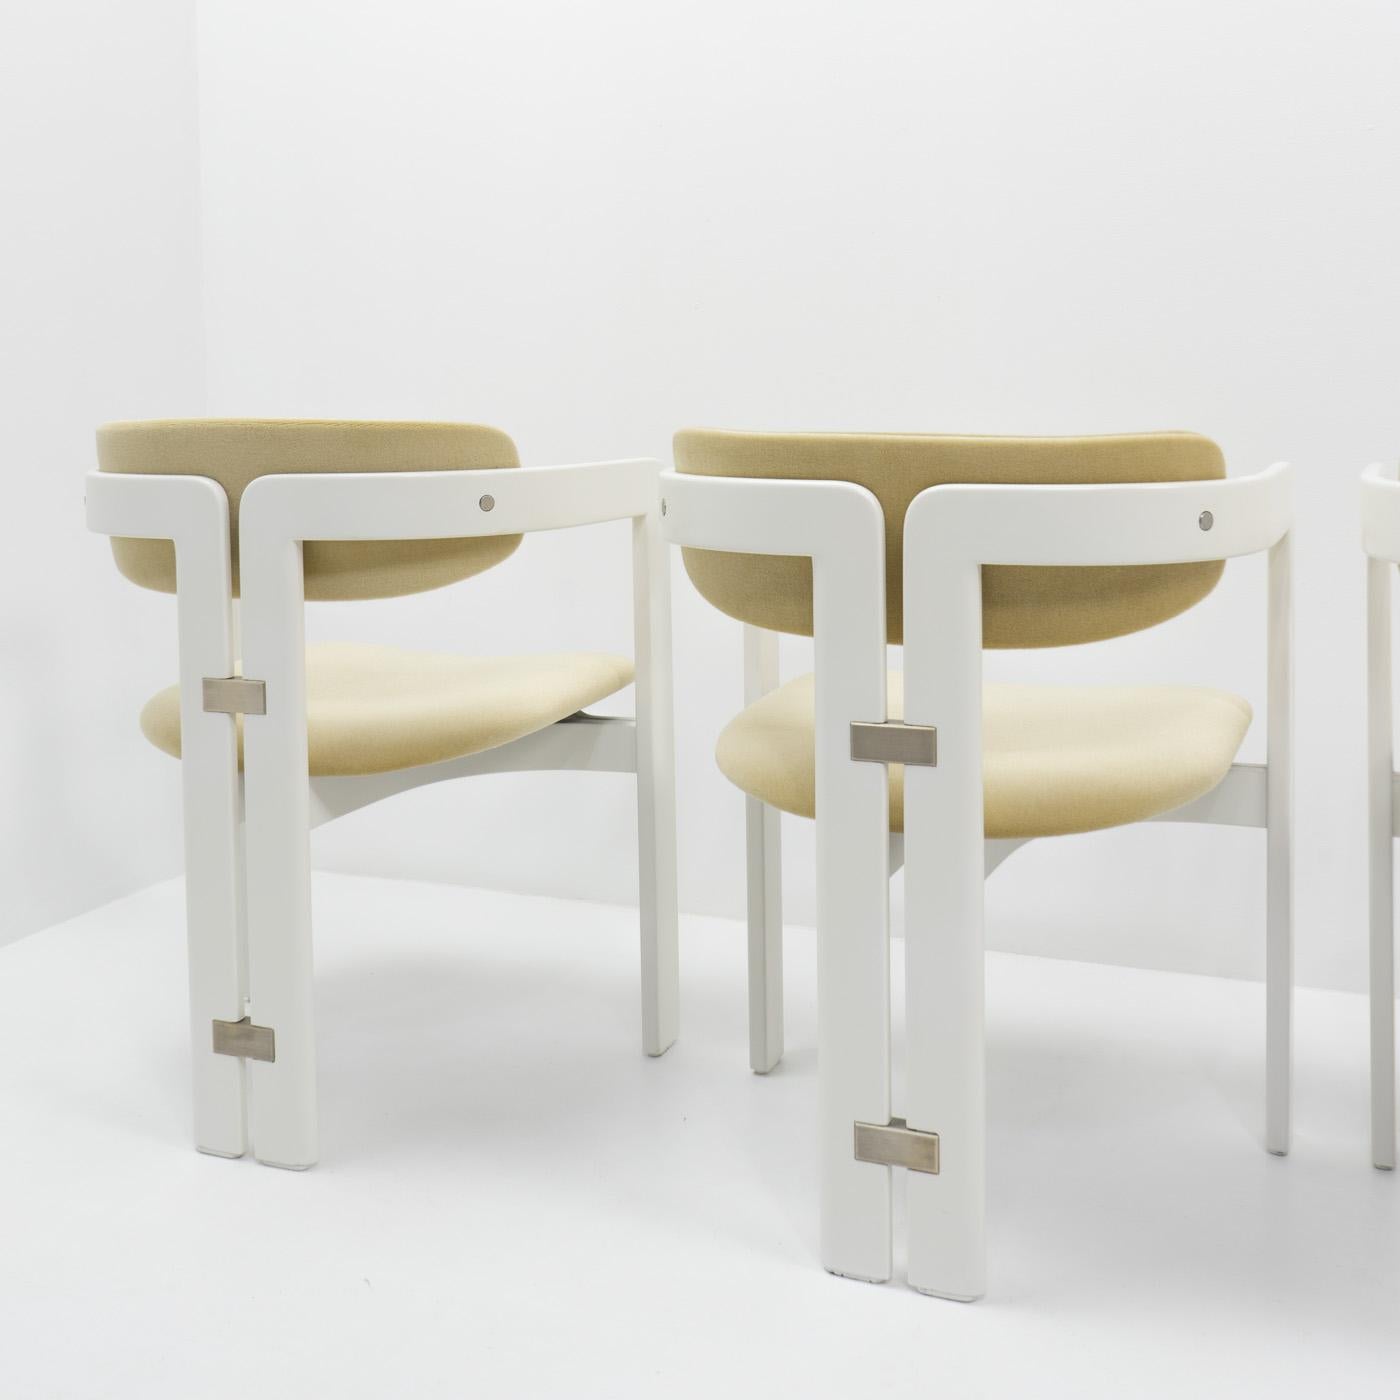 Italian Design Pamplona Chairs by Augusto Savini, 1970s For Sale 3